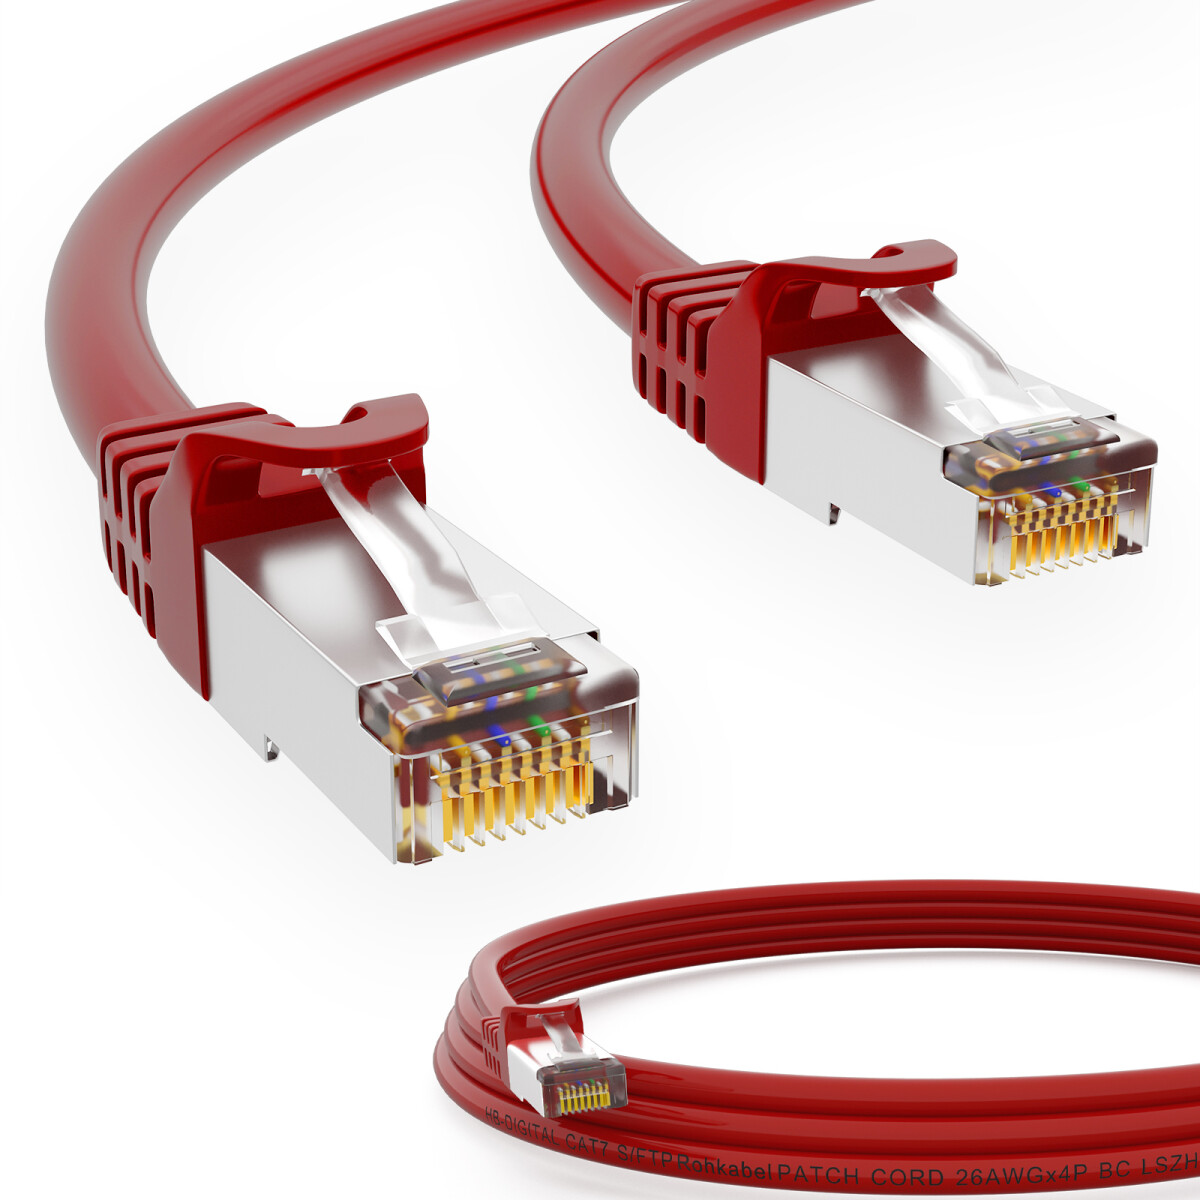 CAT7 600Mhz 10 Gigabit F/FTP Shielded RJ45 Network Ethernet Cable 20m Black